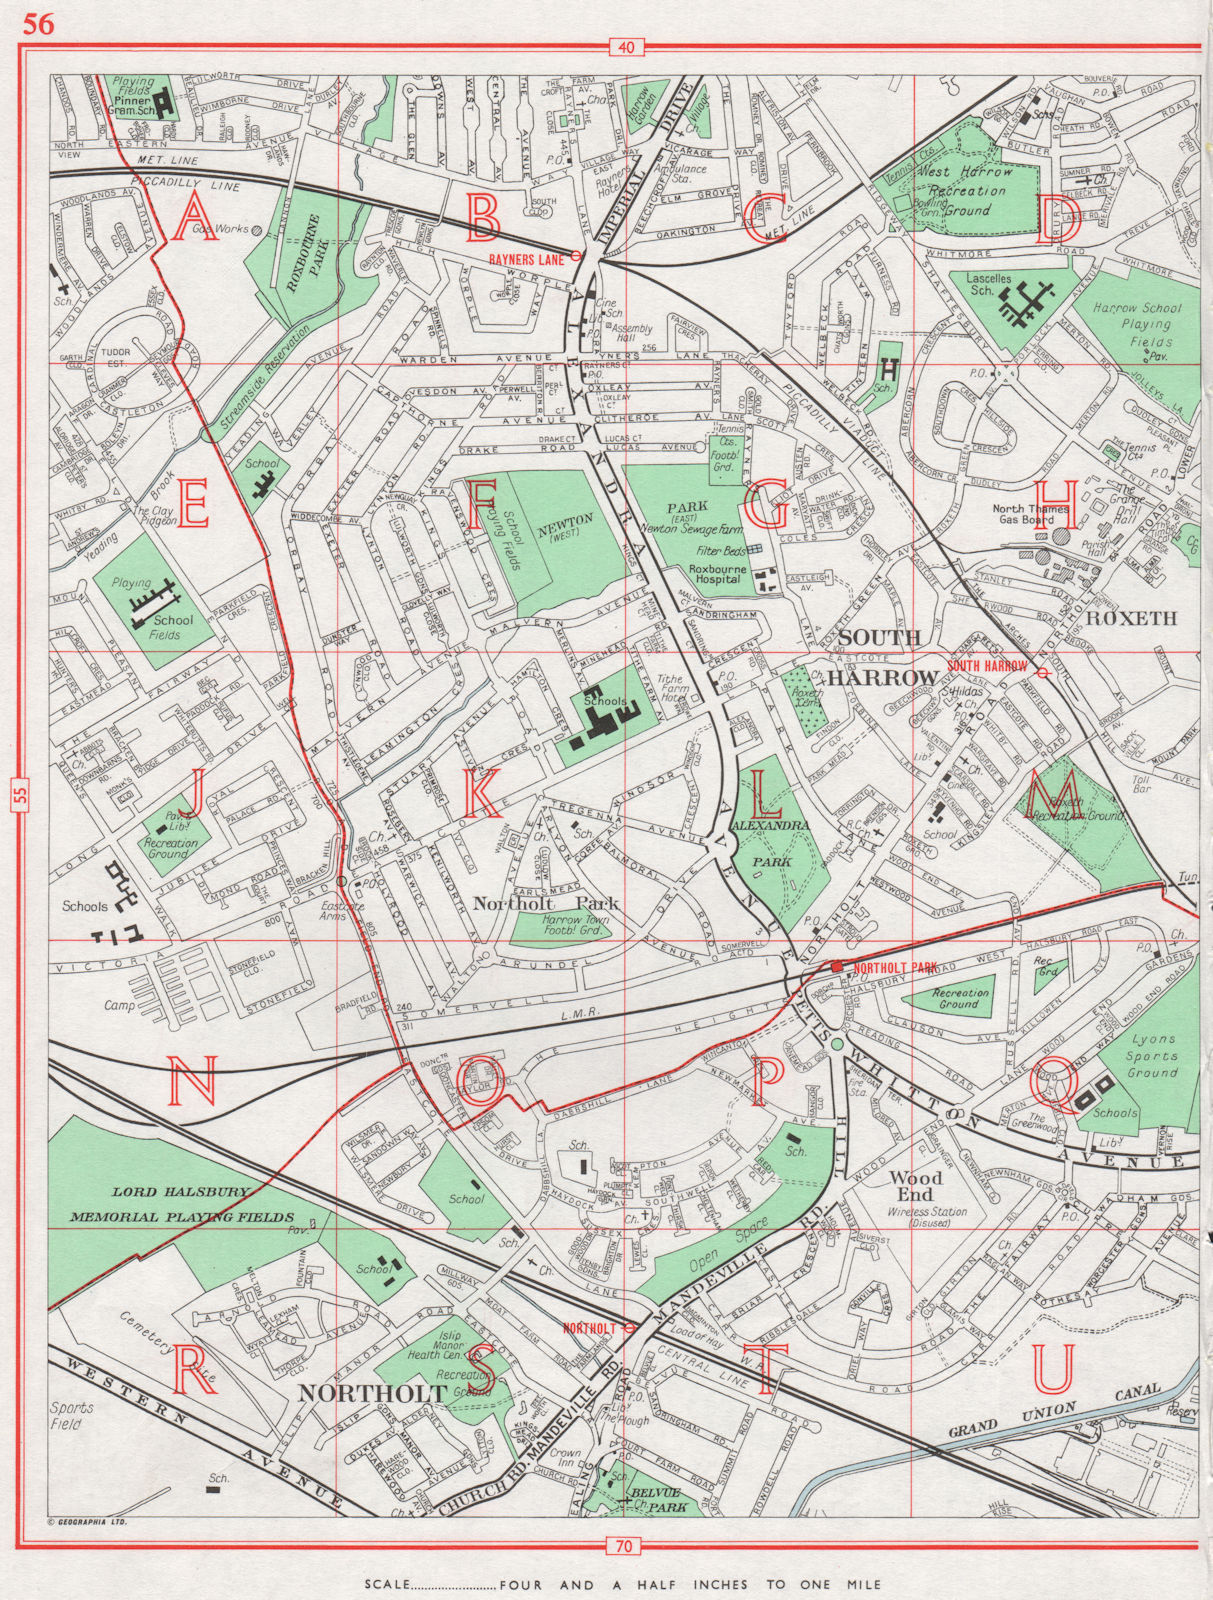 SOUTH HARROW. Roxeth Wood End Northolt Northolt Park Rayner's Lane 1964 map